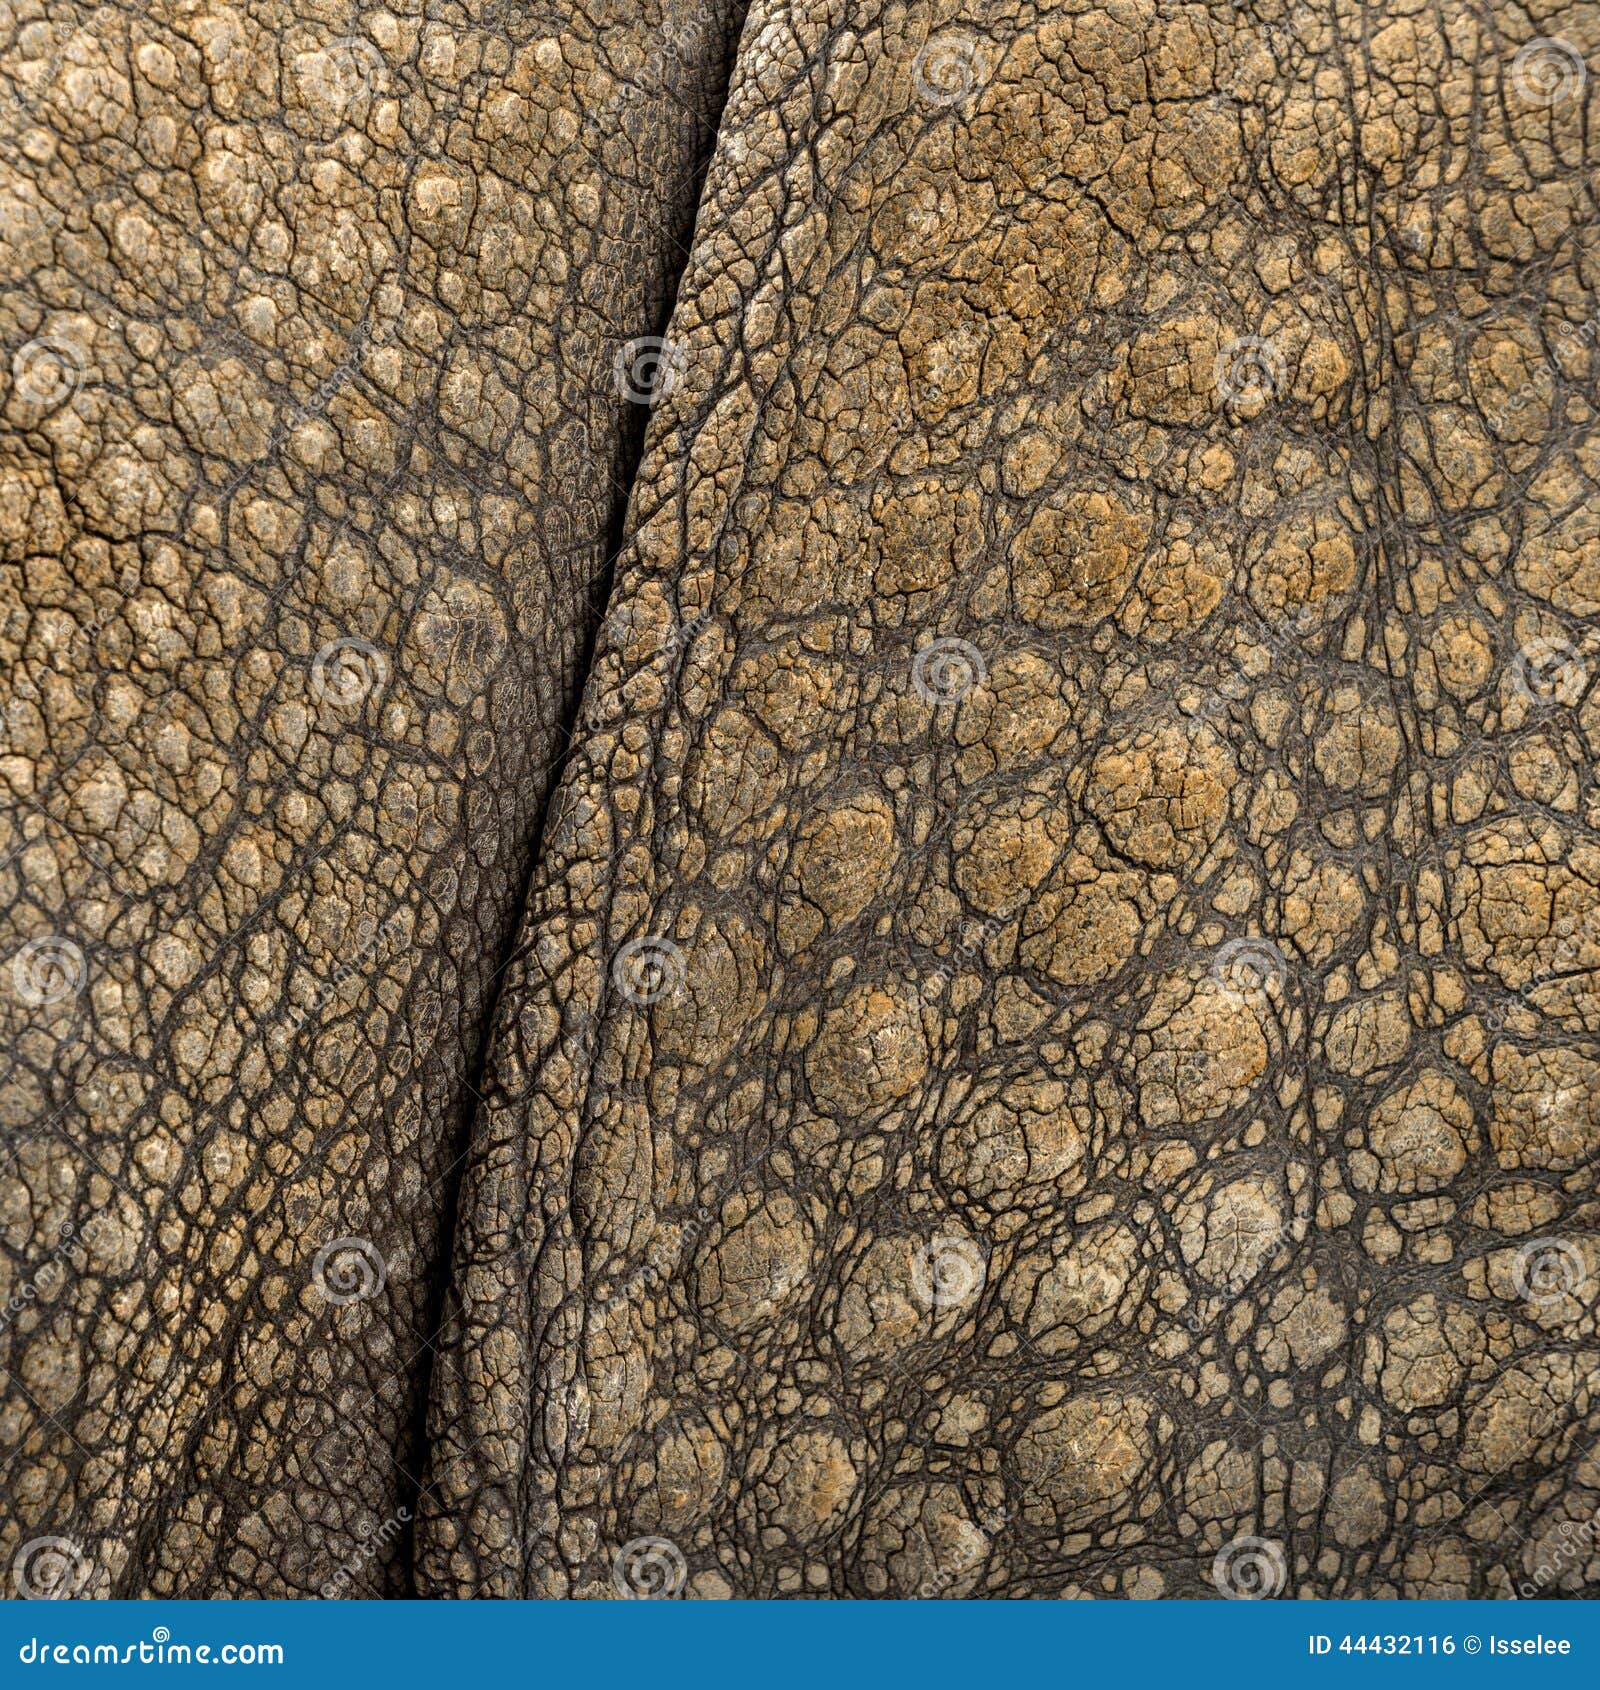 close-up on indian rhinoceros skin